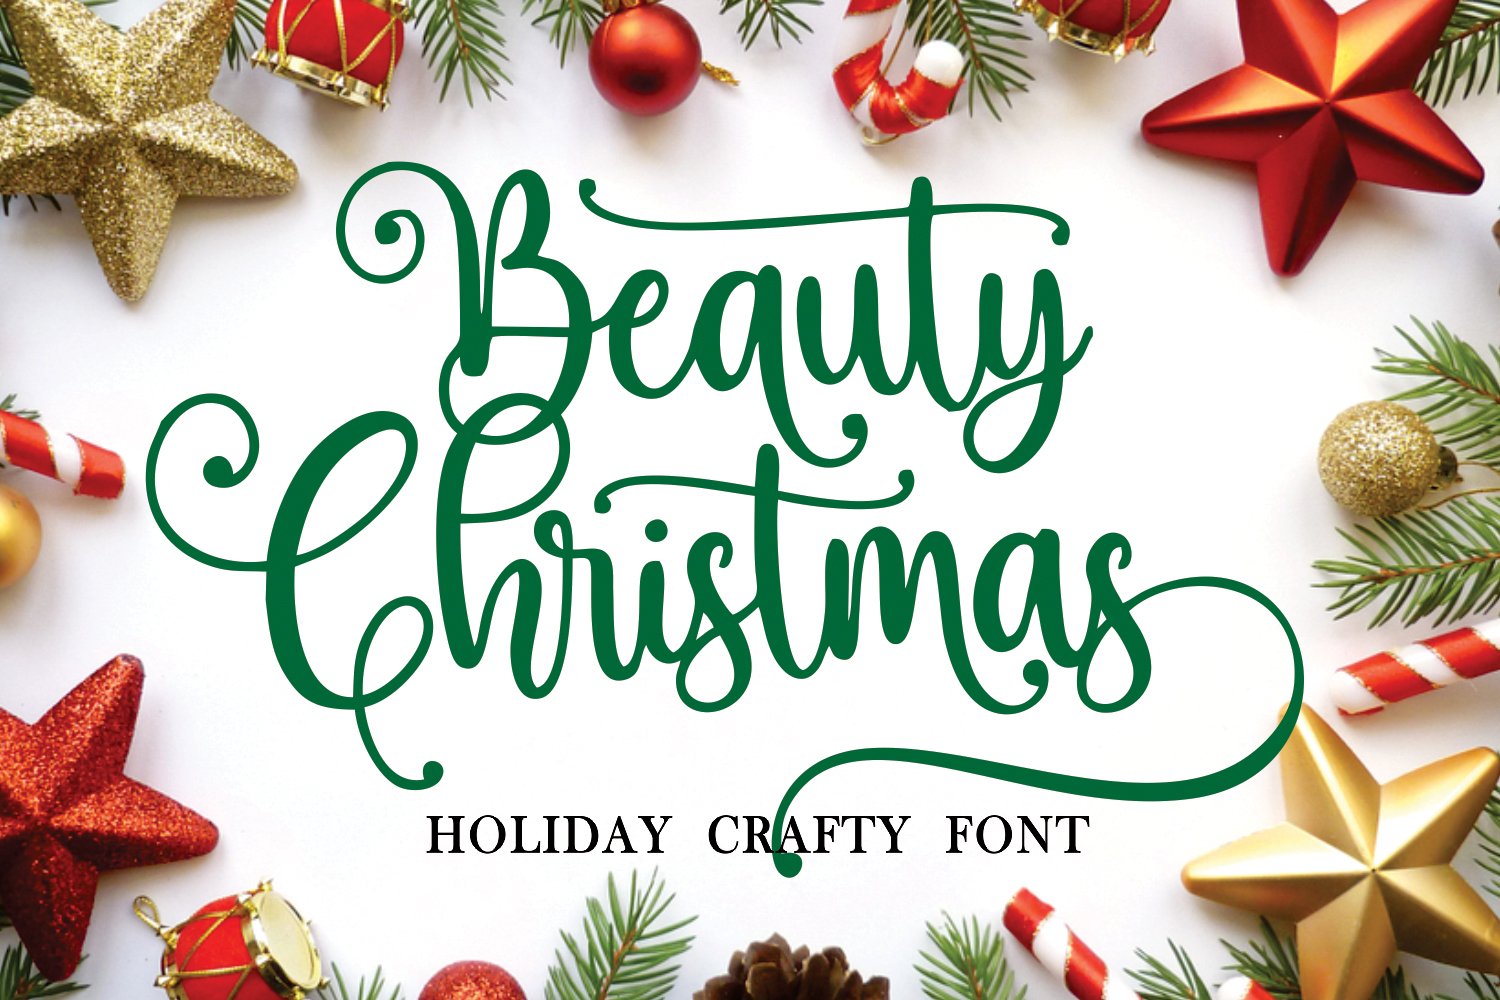 Beauty Christmas cover image.